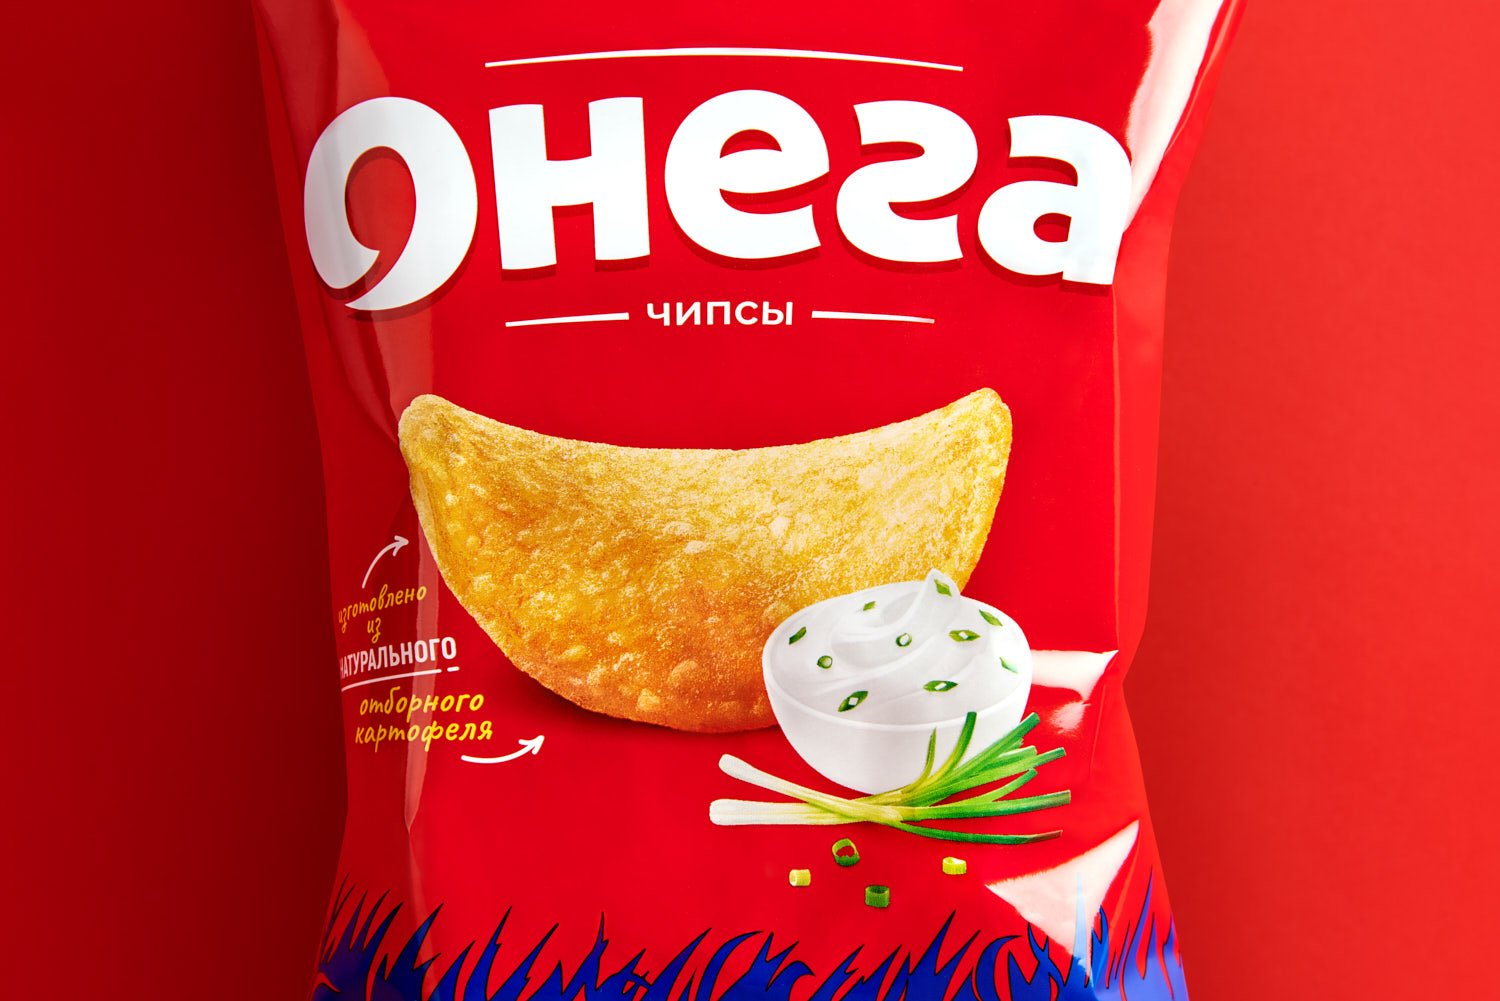 Онега индекс. Онега чипсы. Онега логотип. Онега упаковка. Белорусские чипсы Онега.